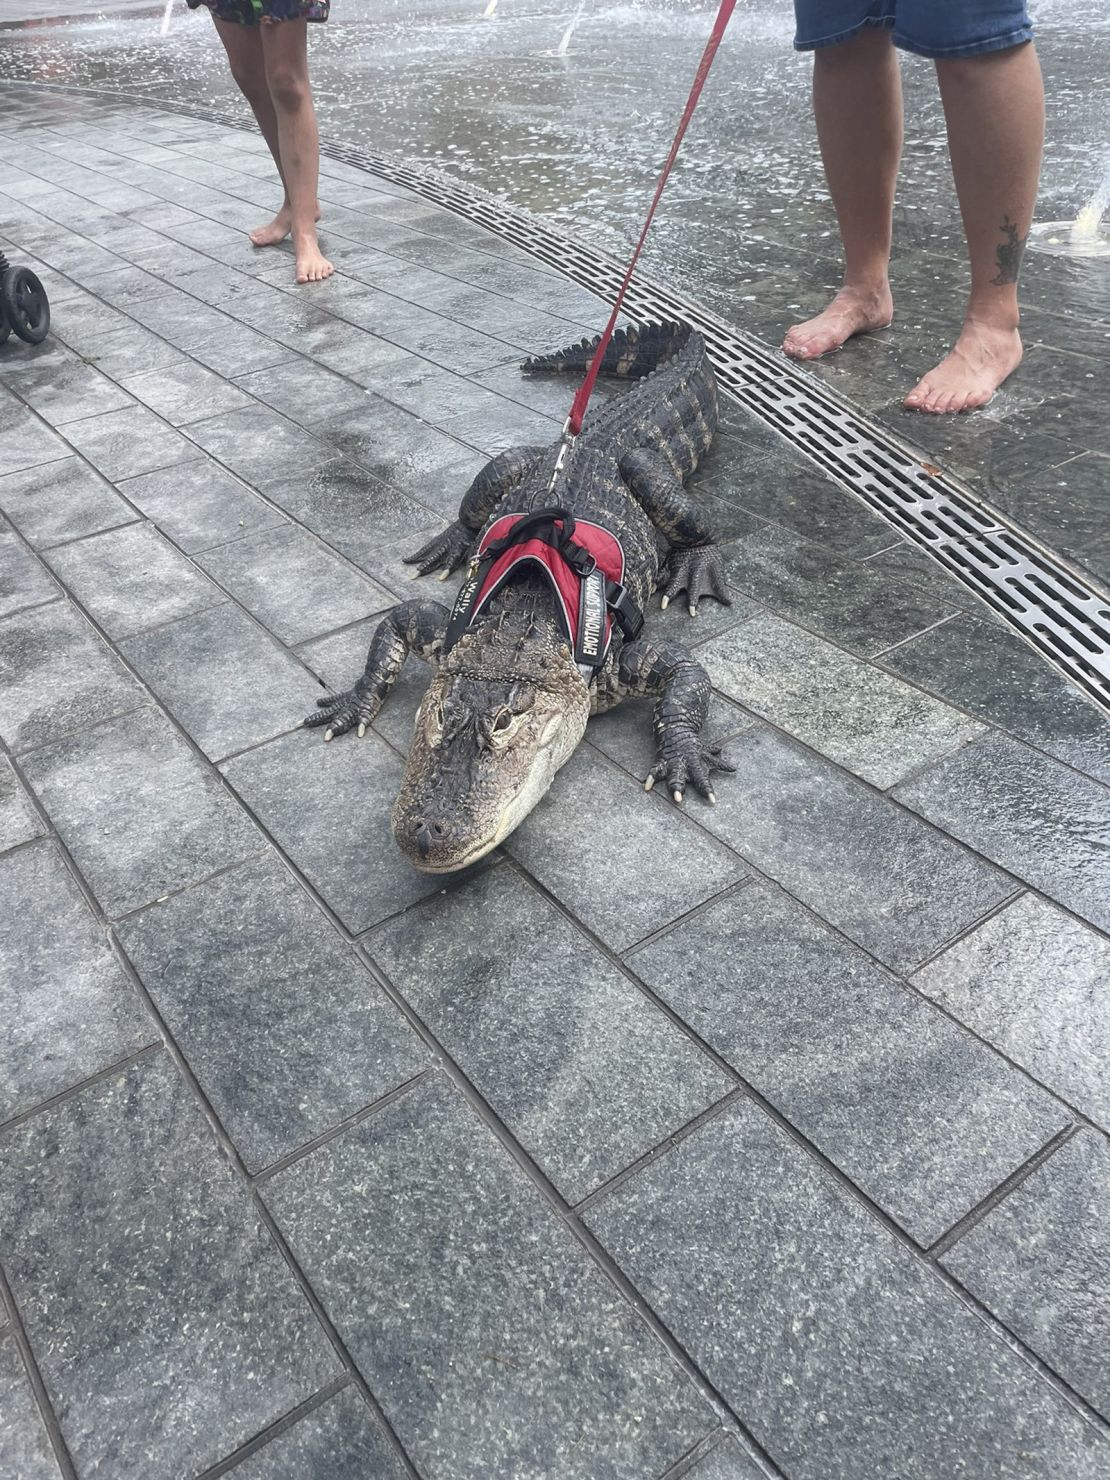 Emotional support alligator wanders around Love Park in Philadelphia